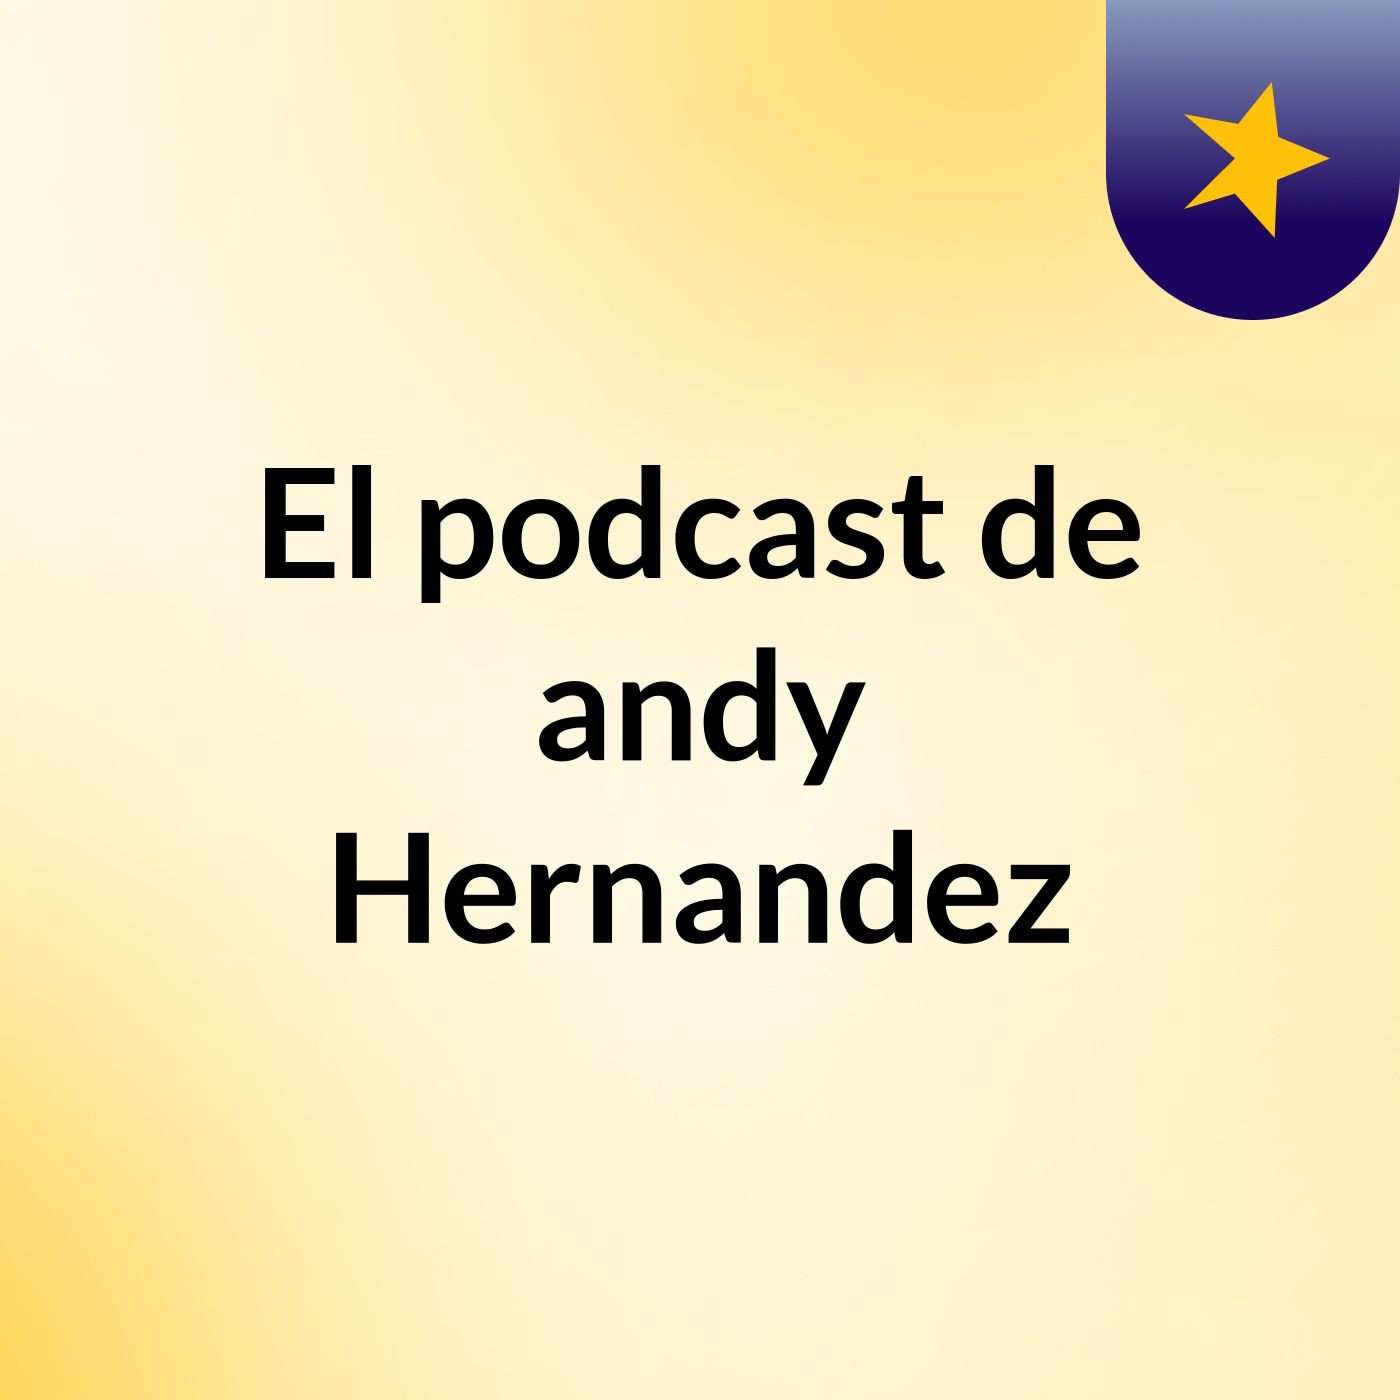 El podcast de andy Hernandez